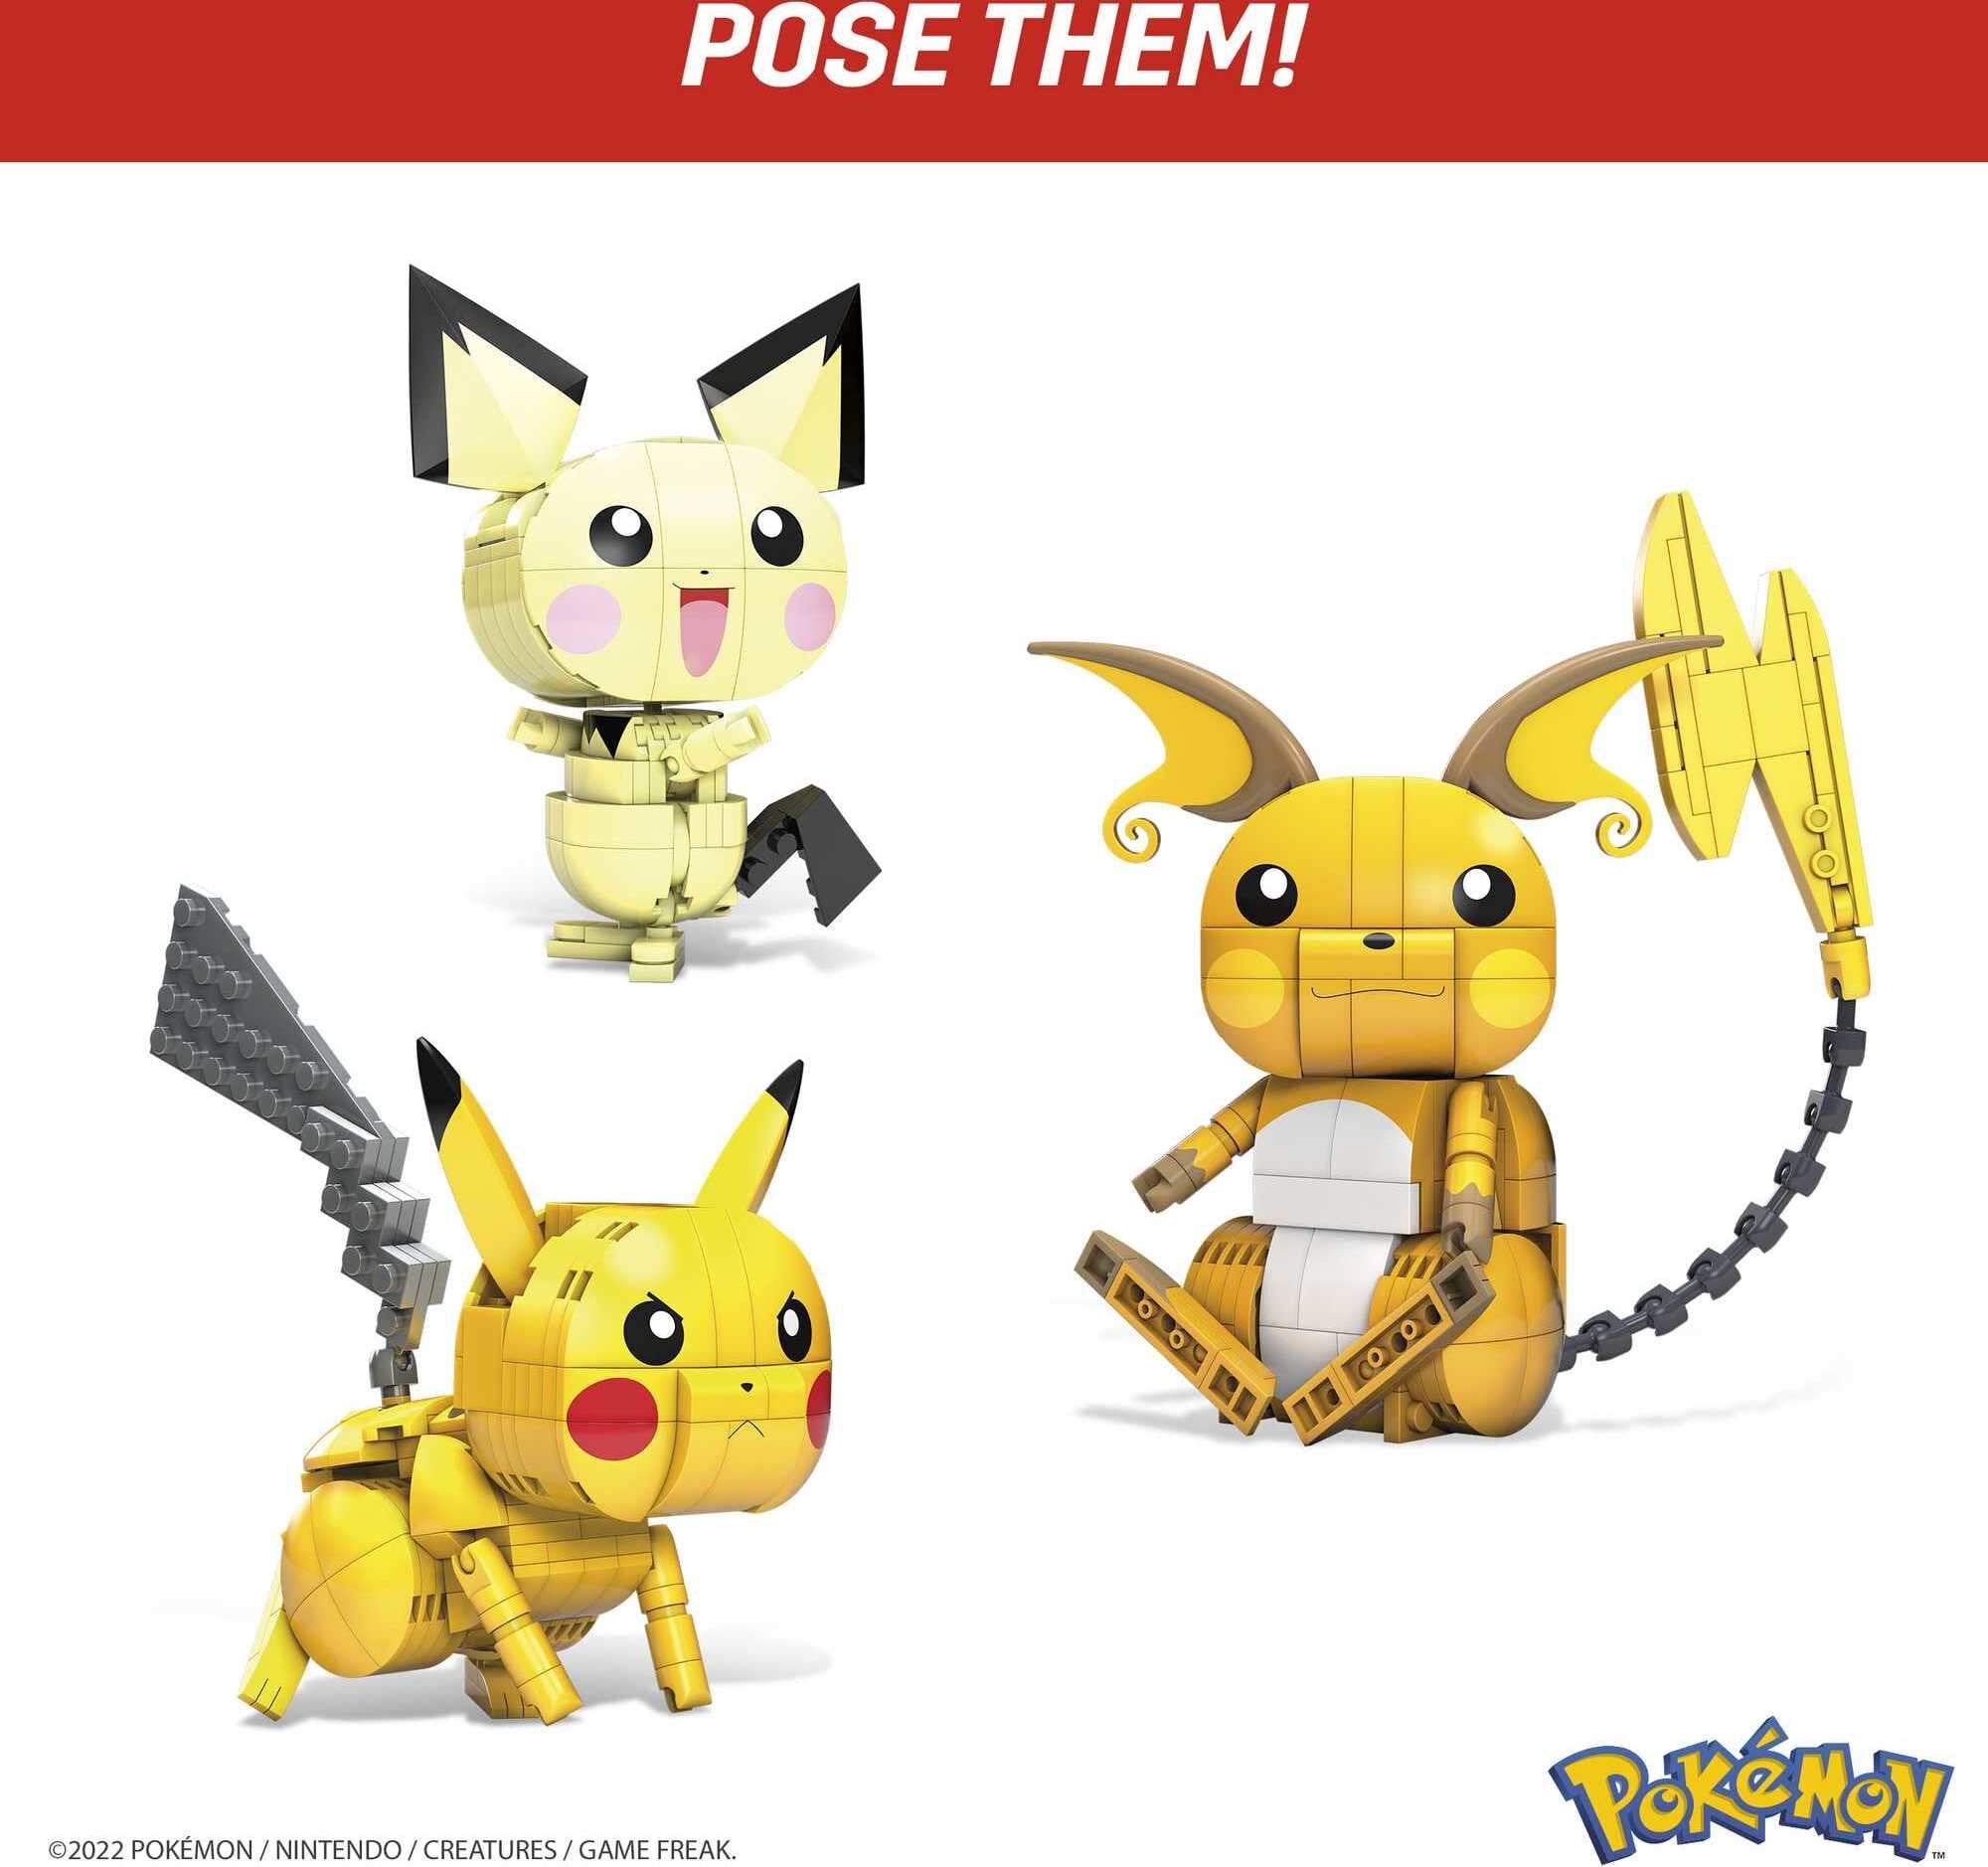 MEGA Construx Pokémon Pikachu Evolution Set